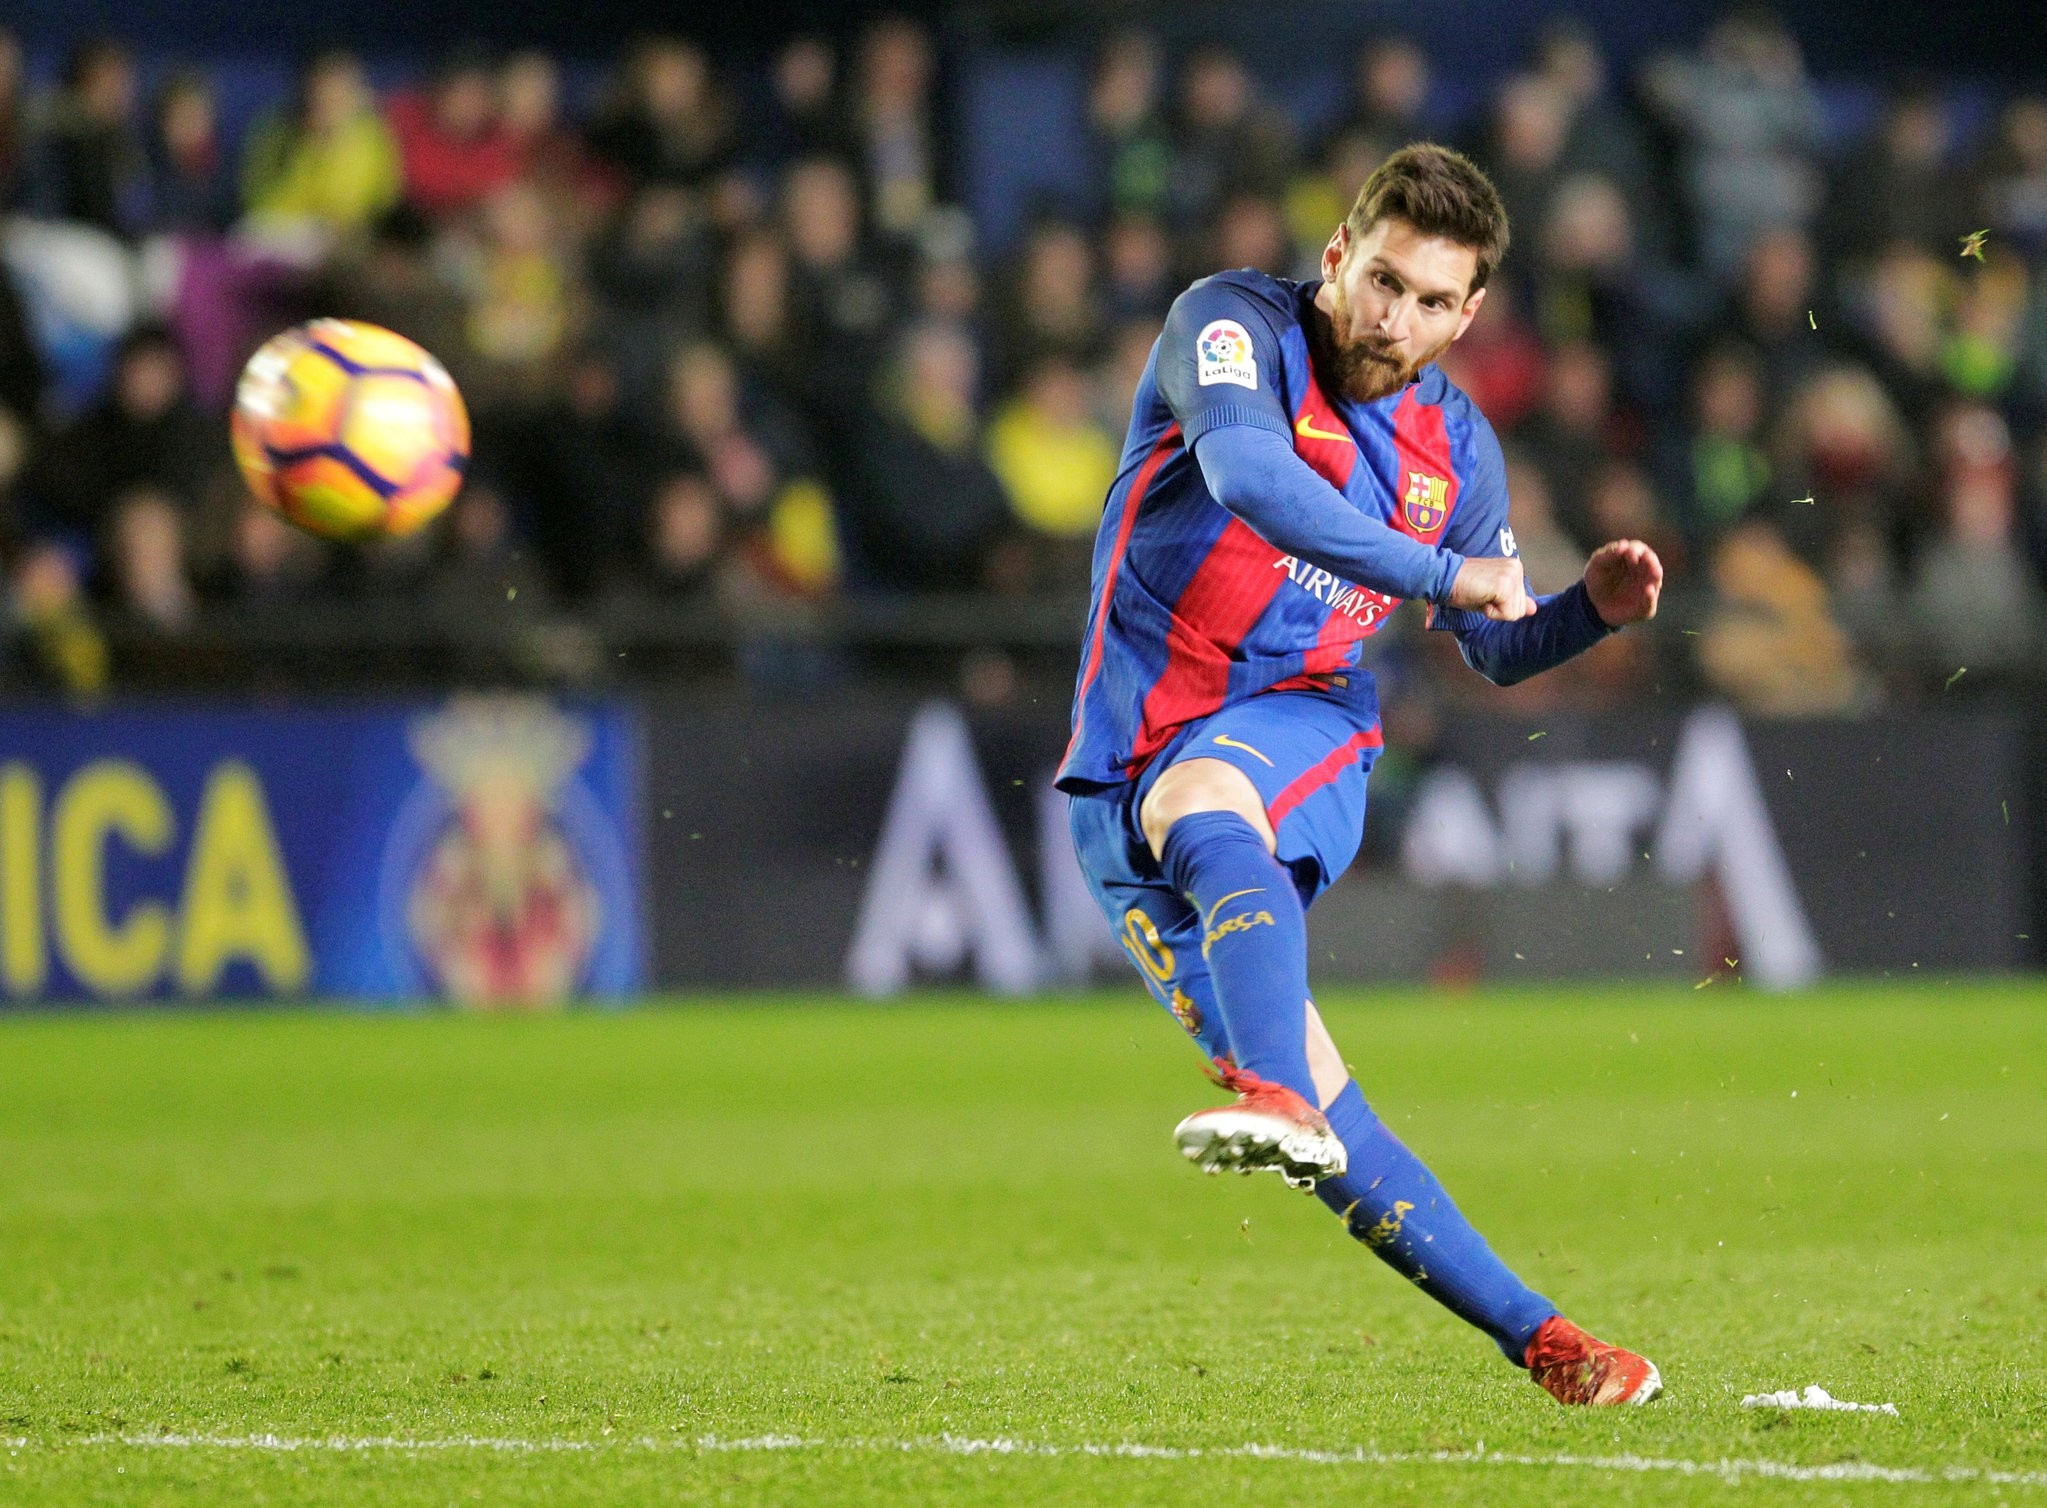 Lionel Messi shoots to score for Barcelona vs. Villarreal 08/01/17. (REUTERS Photo)